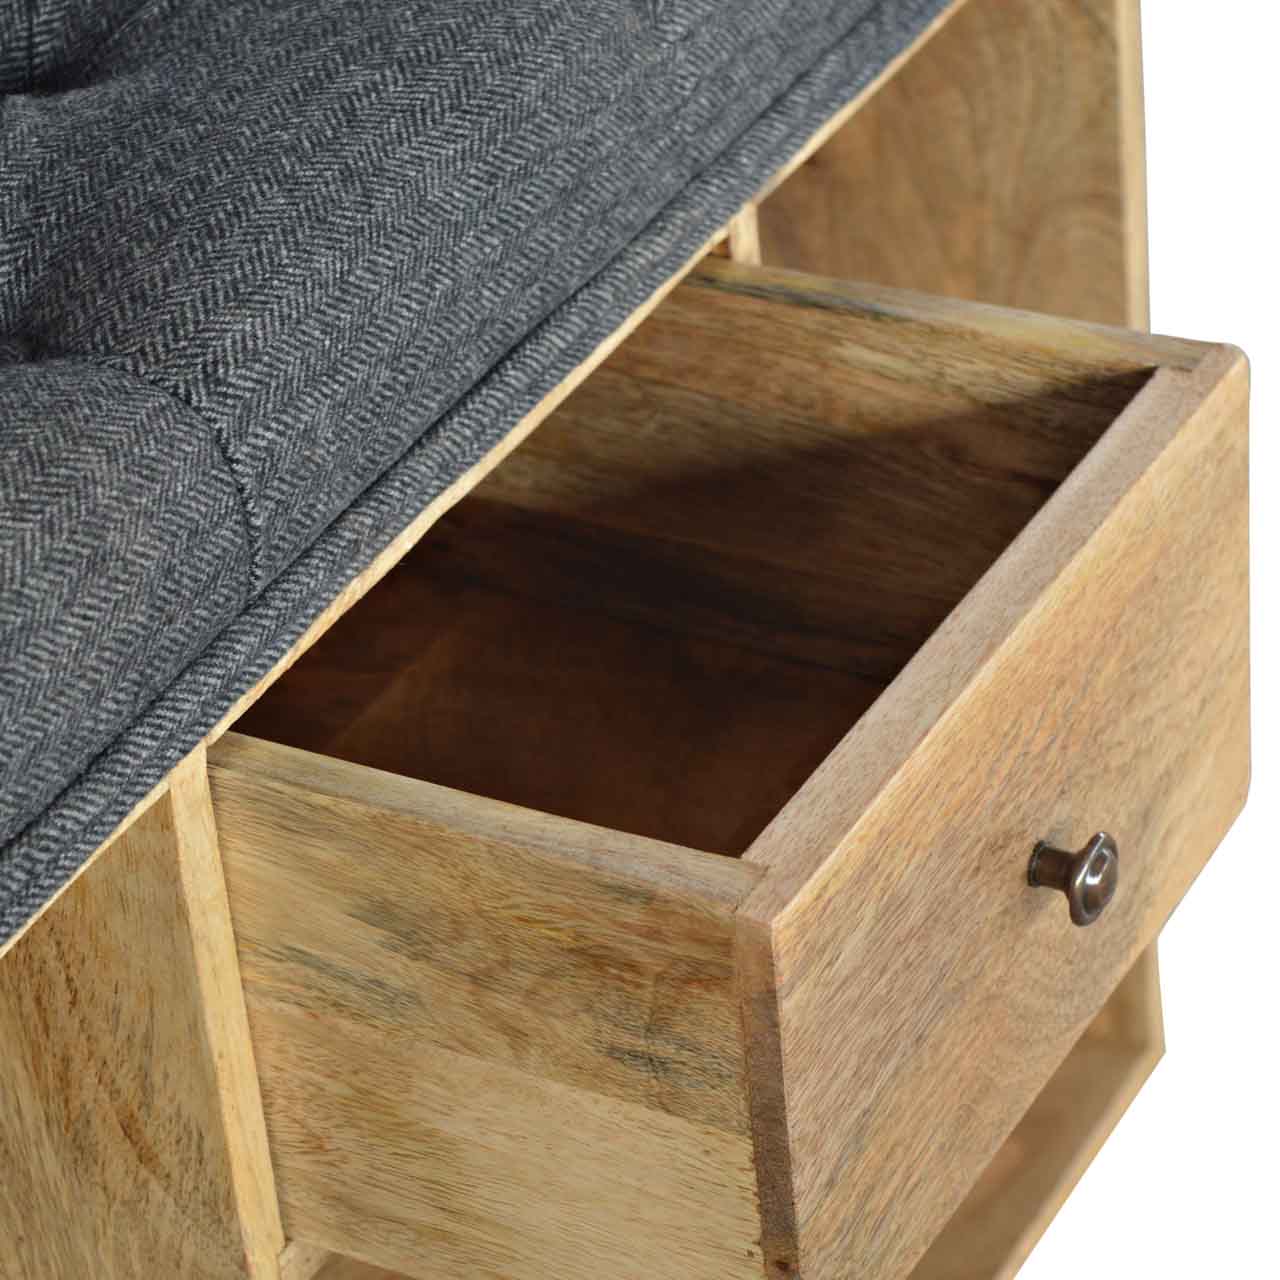 Black Tweed Shoe Storage Bench With Seat In Oak Finish 80cm